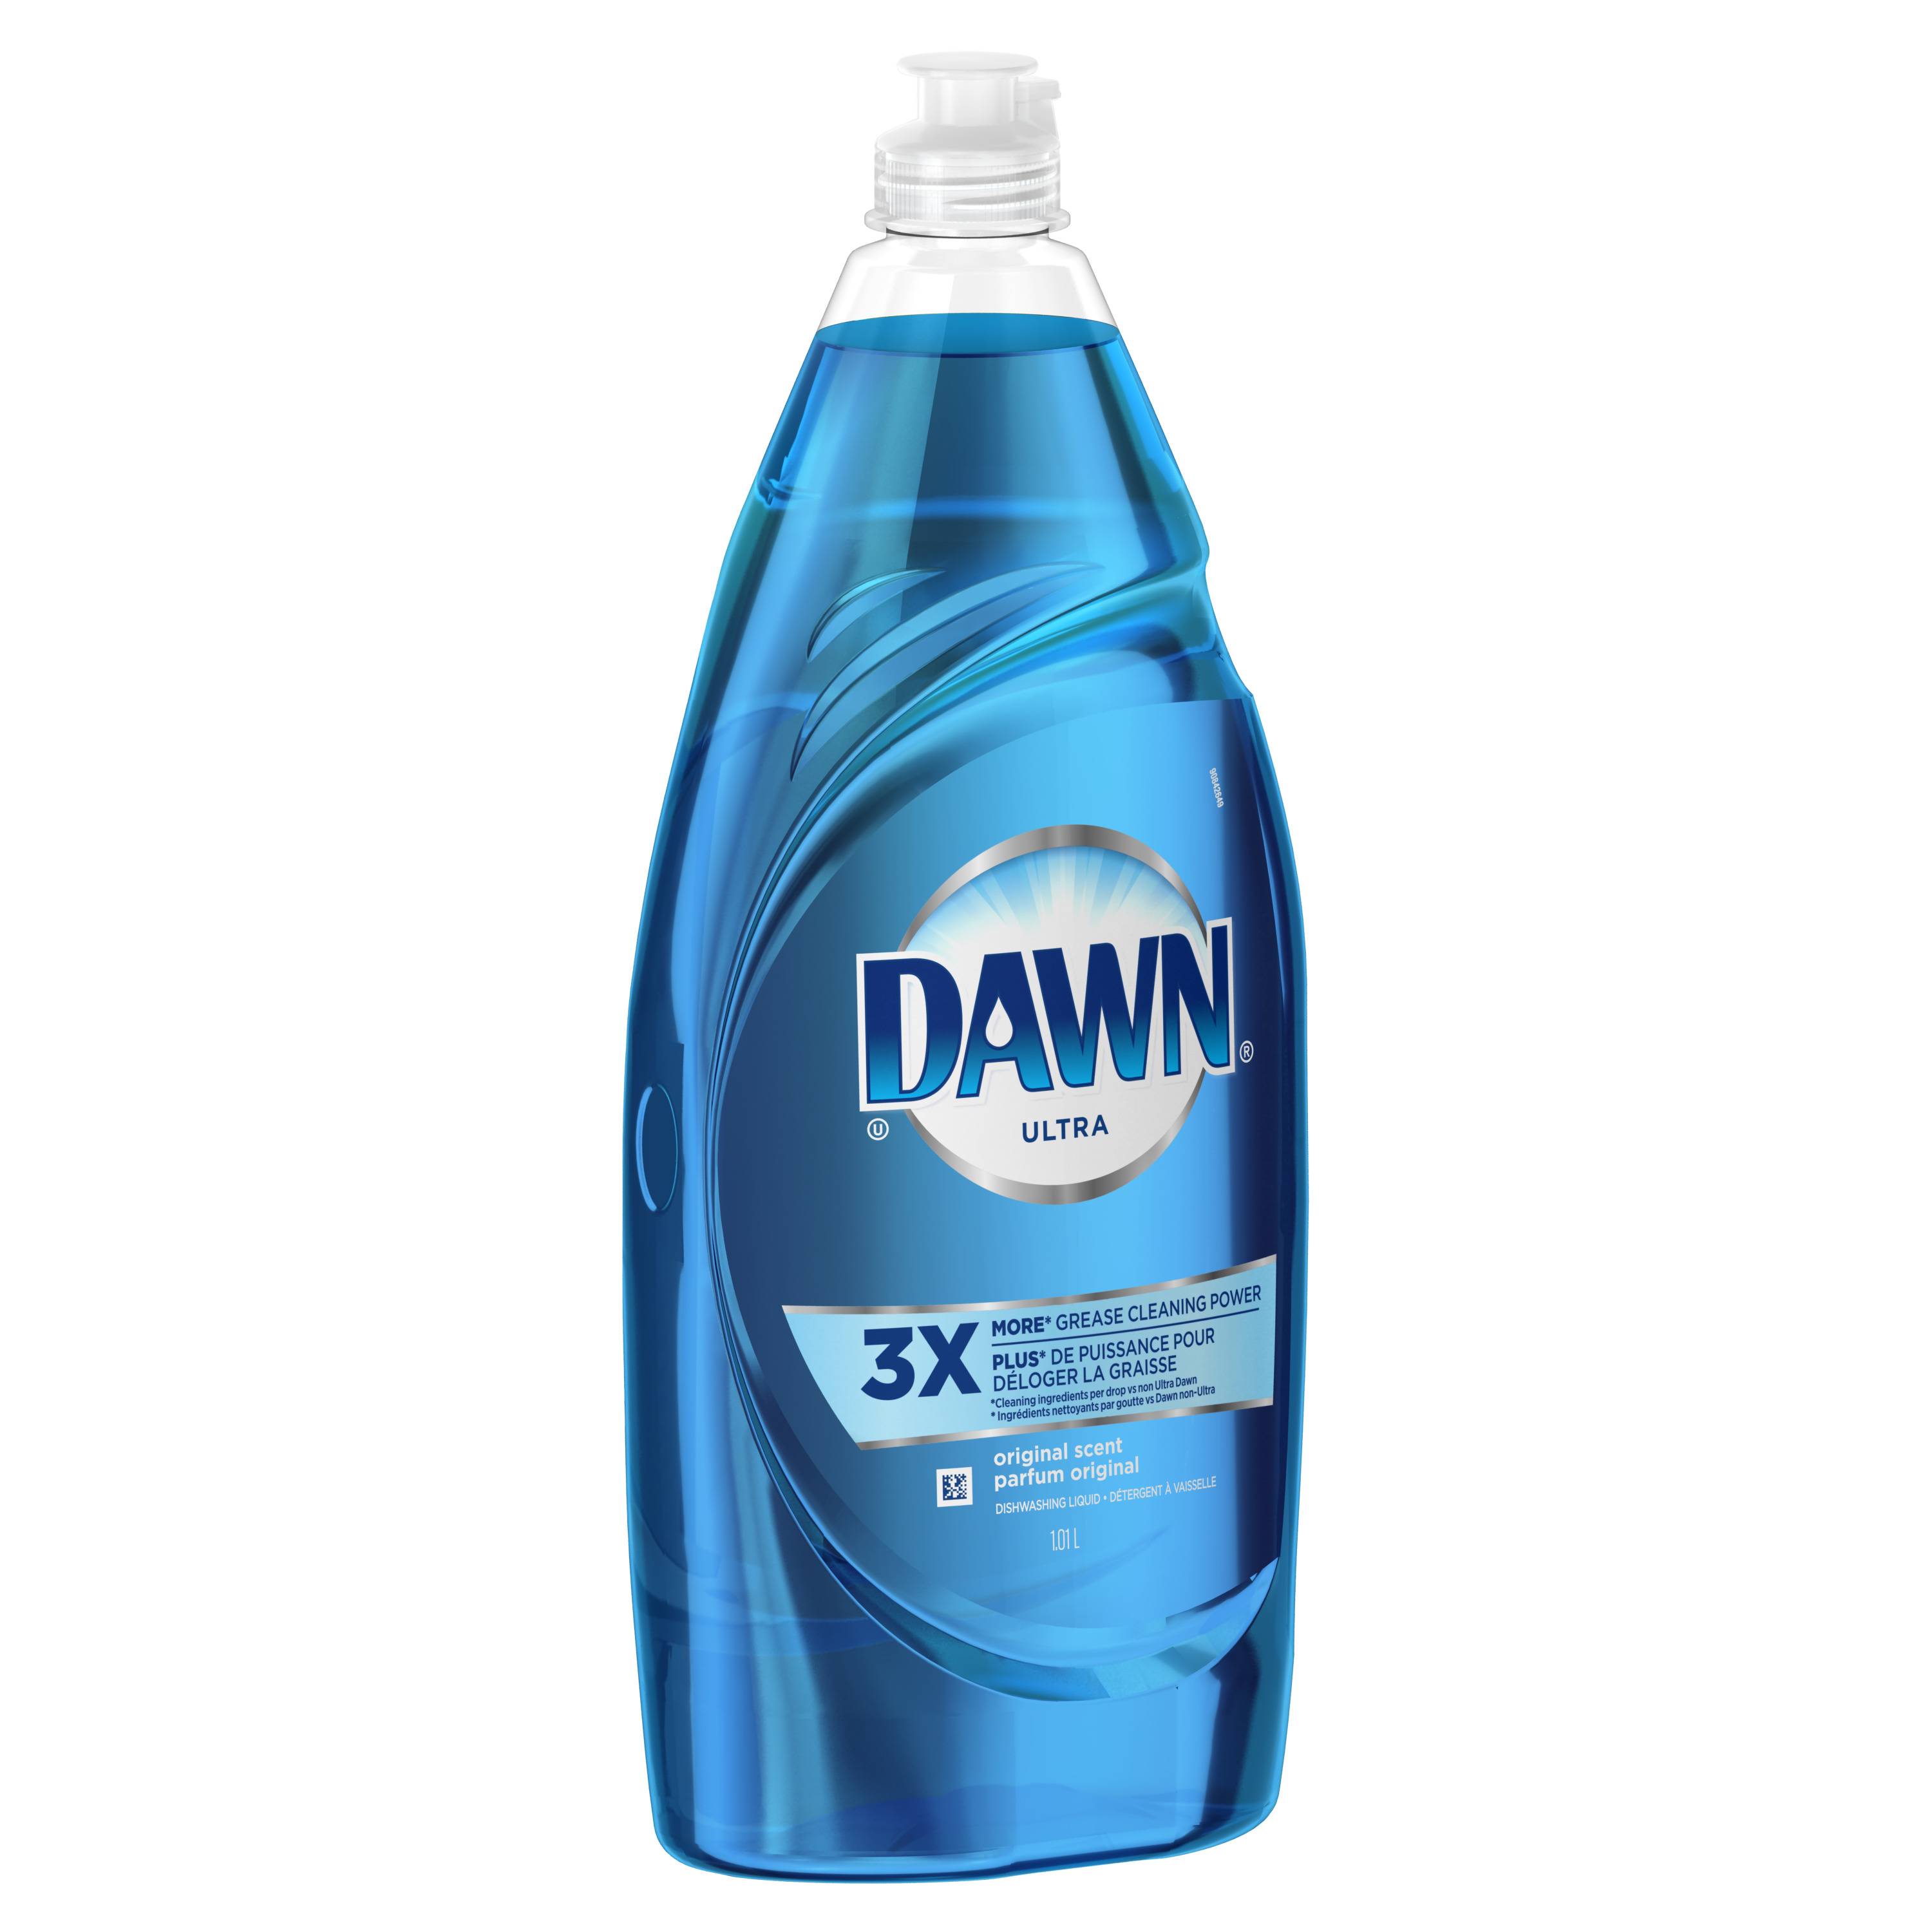 Dawn Ultra Dishwashing Liquid Dish Soap, Original Scent, 1.01 L - image 4 of 7